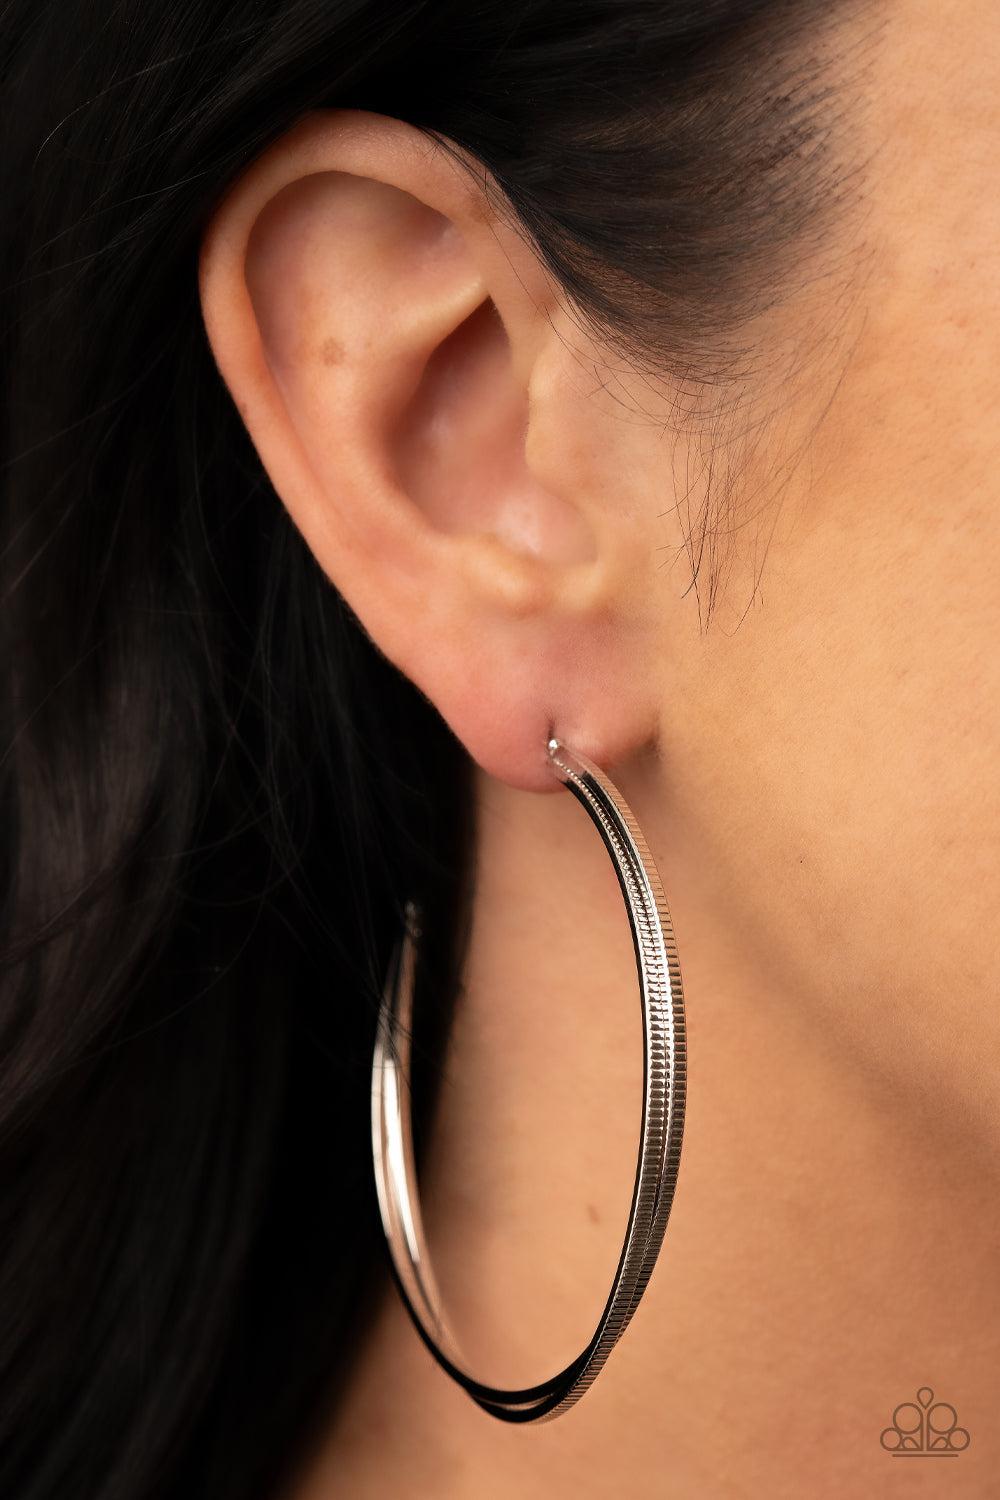 Instagram | Indian jewellery design earrings, Silver jewelry fashion,  Indian jewelry earrings